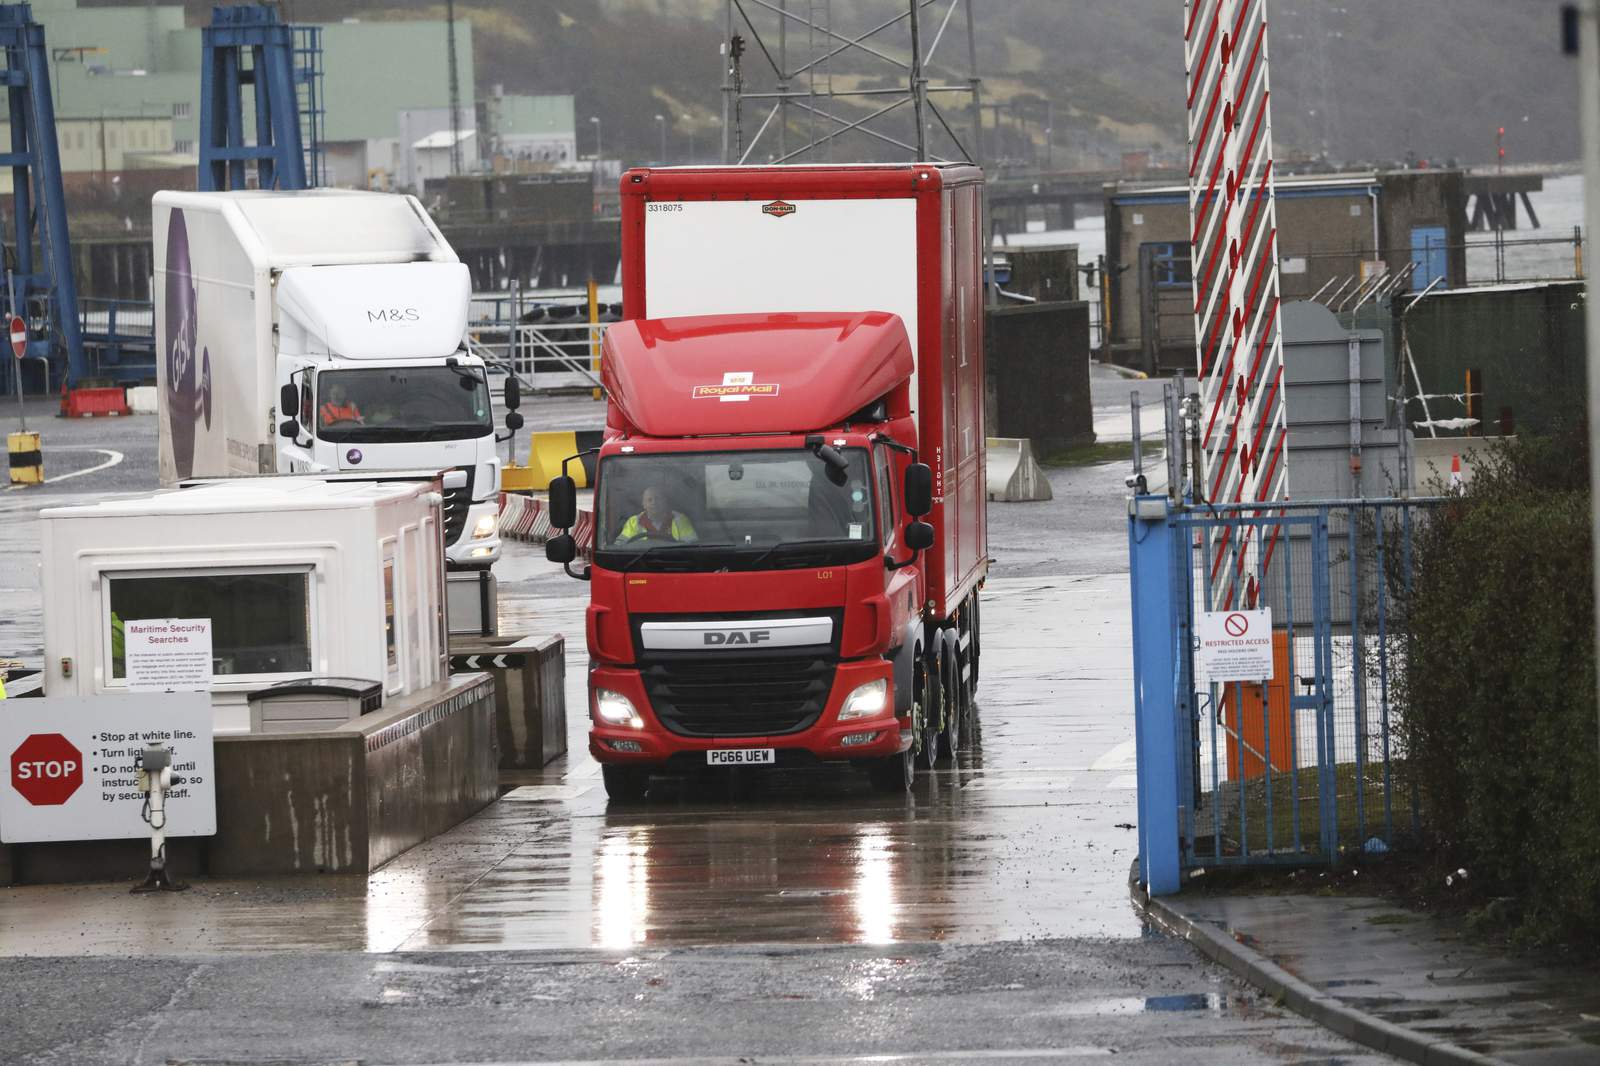 Border checks stopped at N Ireland ports after threats